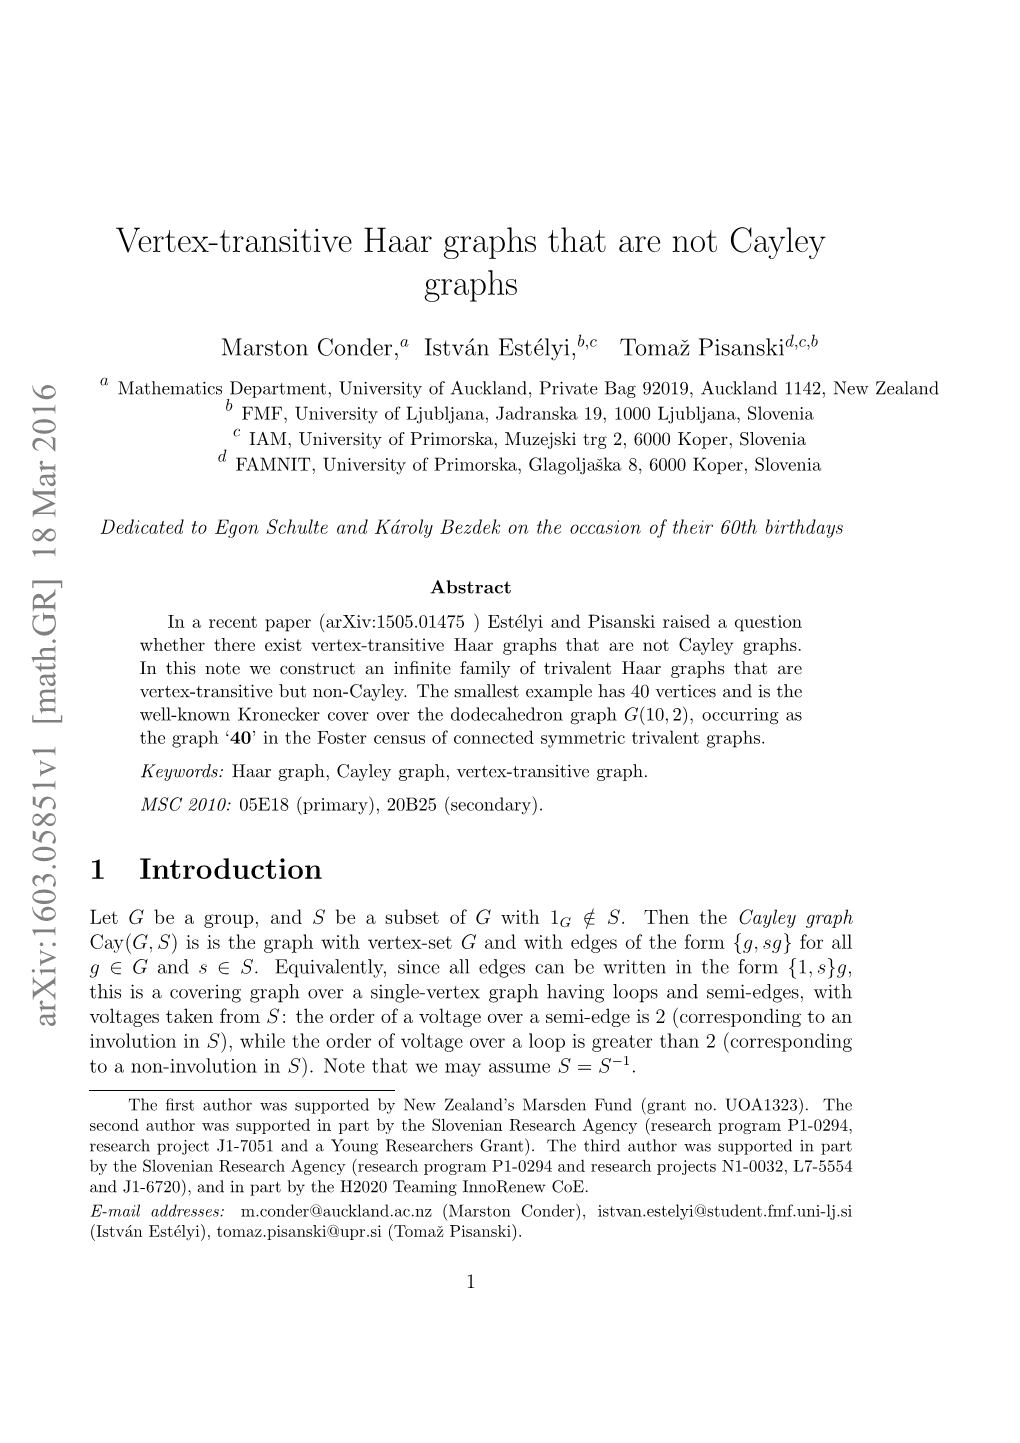 Vertex-Transitive Haar Graphs That Are Not Cayley Graphs